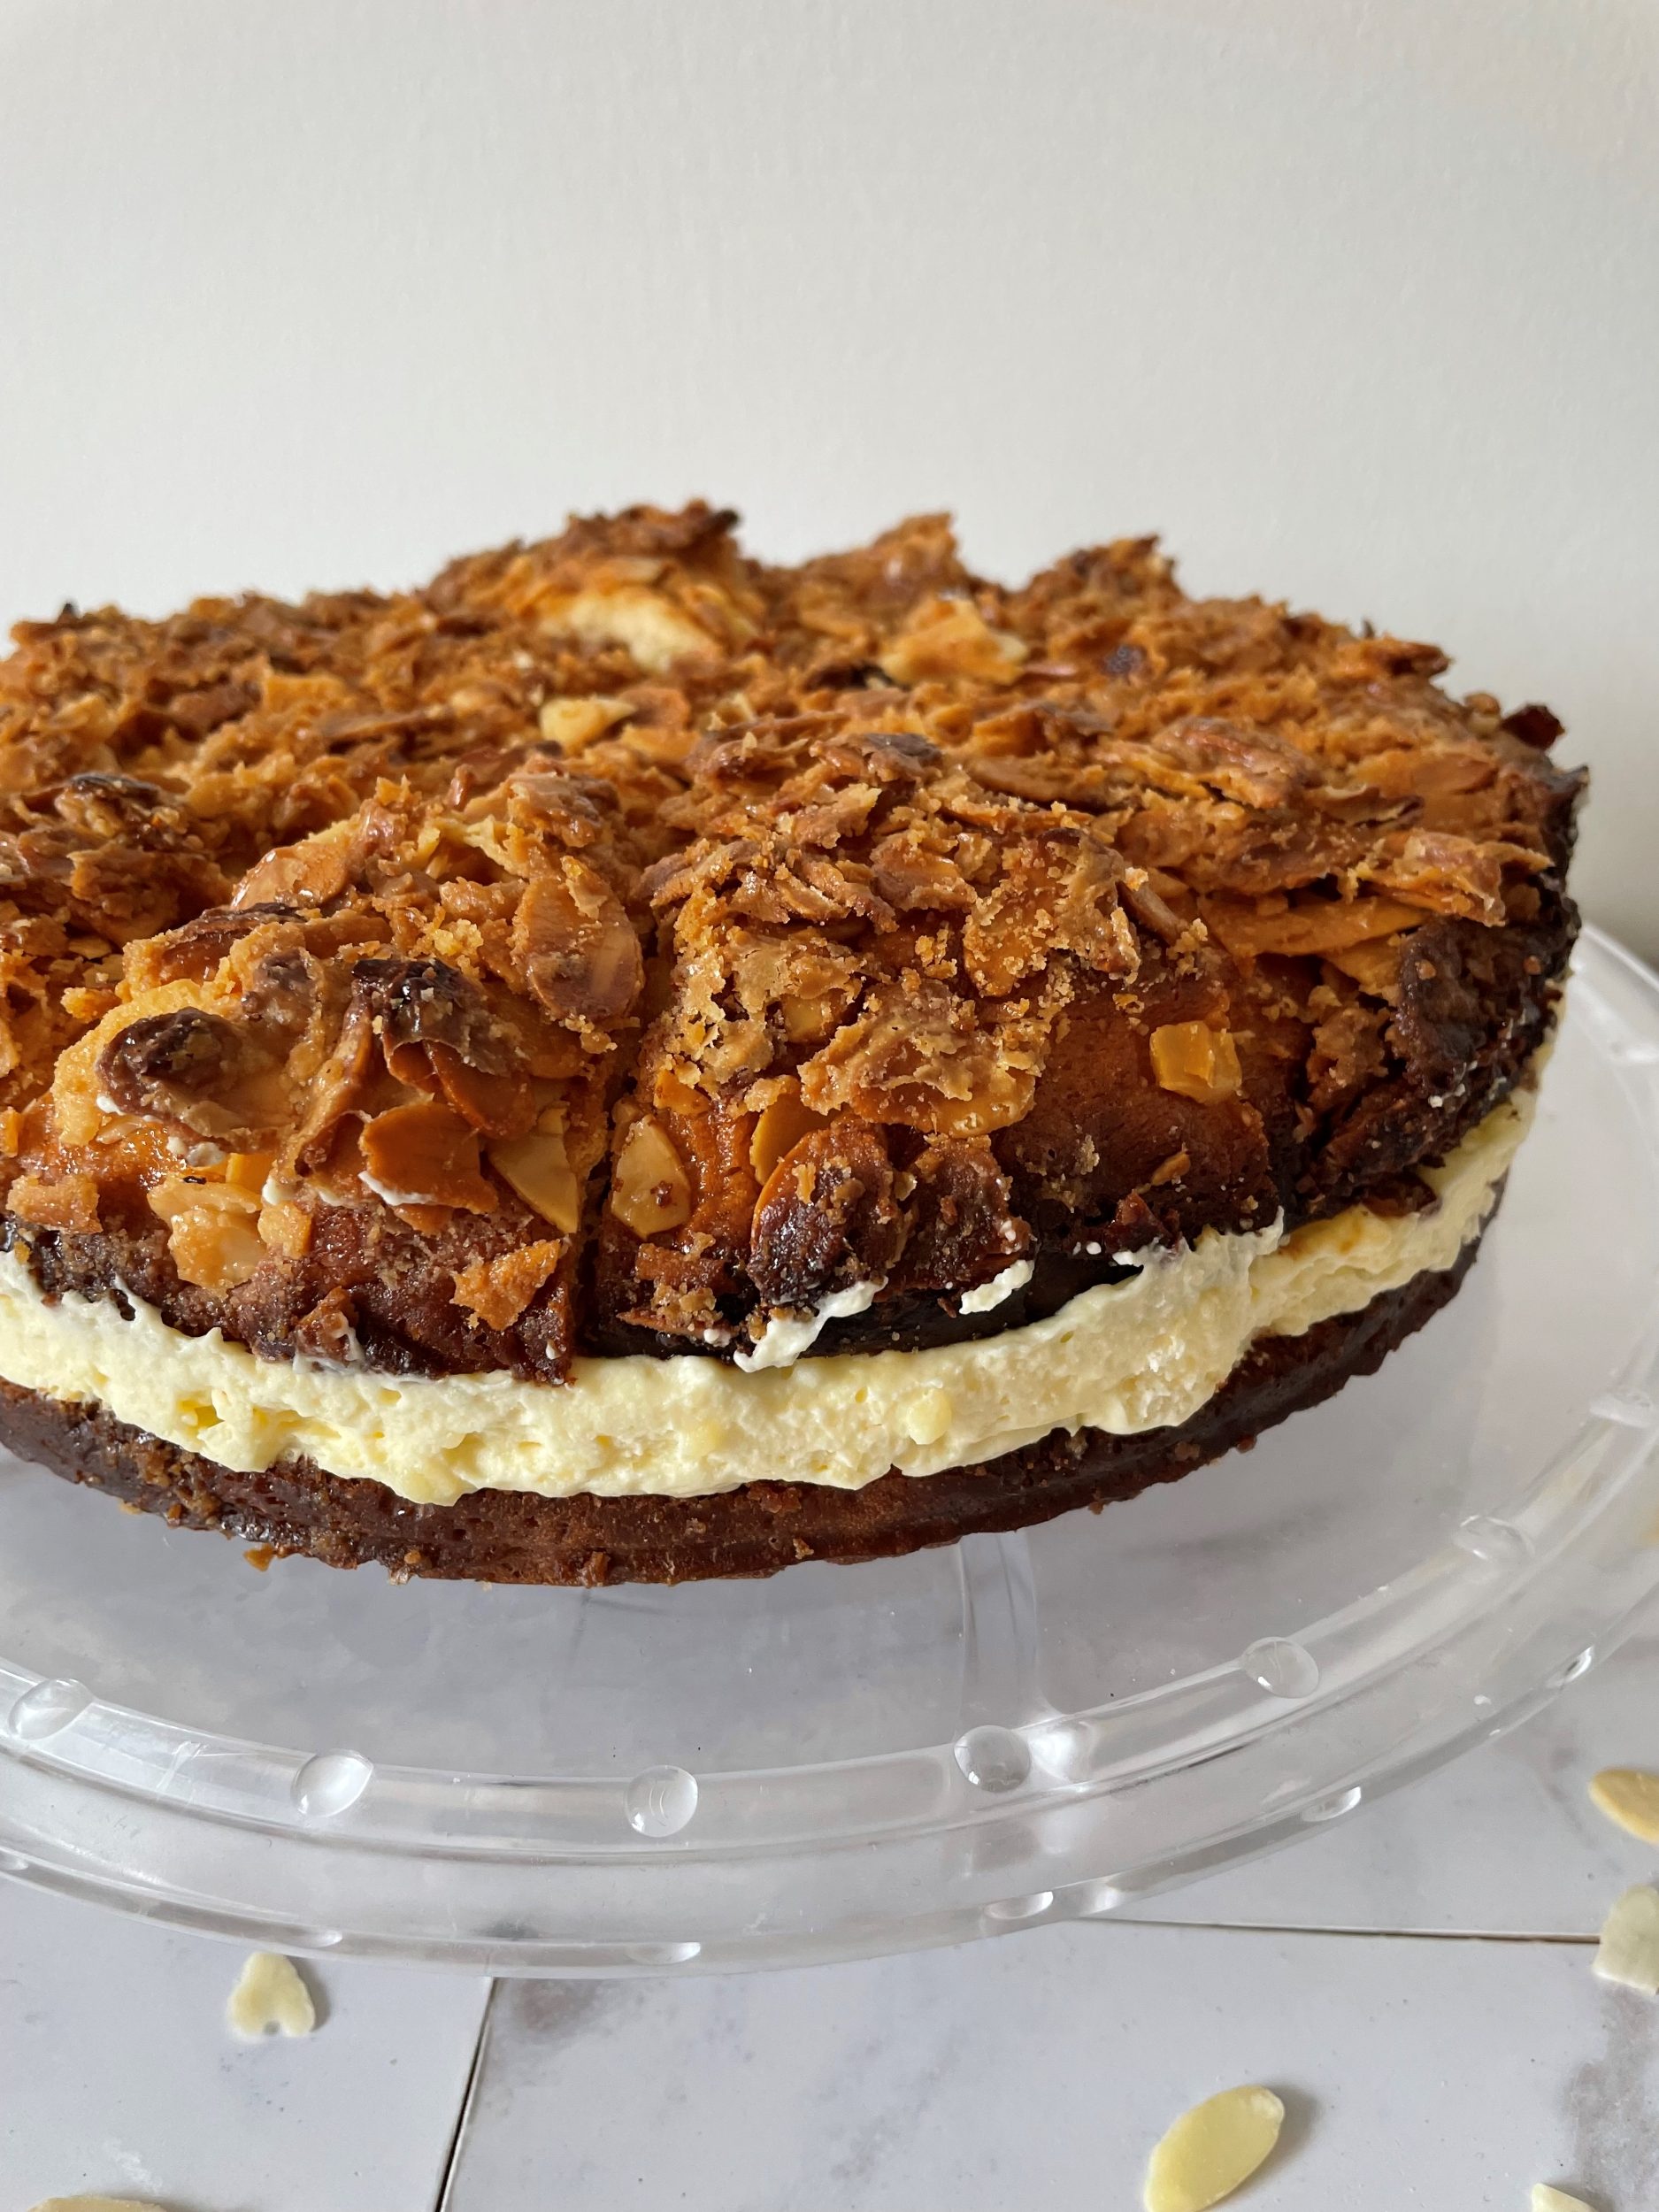 Bienenstich | “Bee Sting” Cake | German Baking Classic - TheUniCook